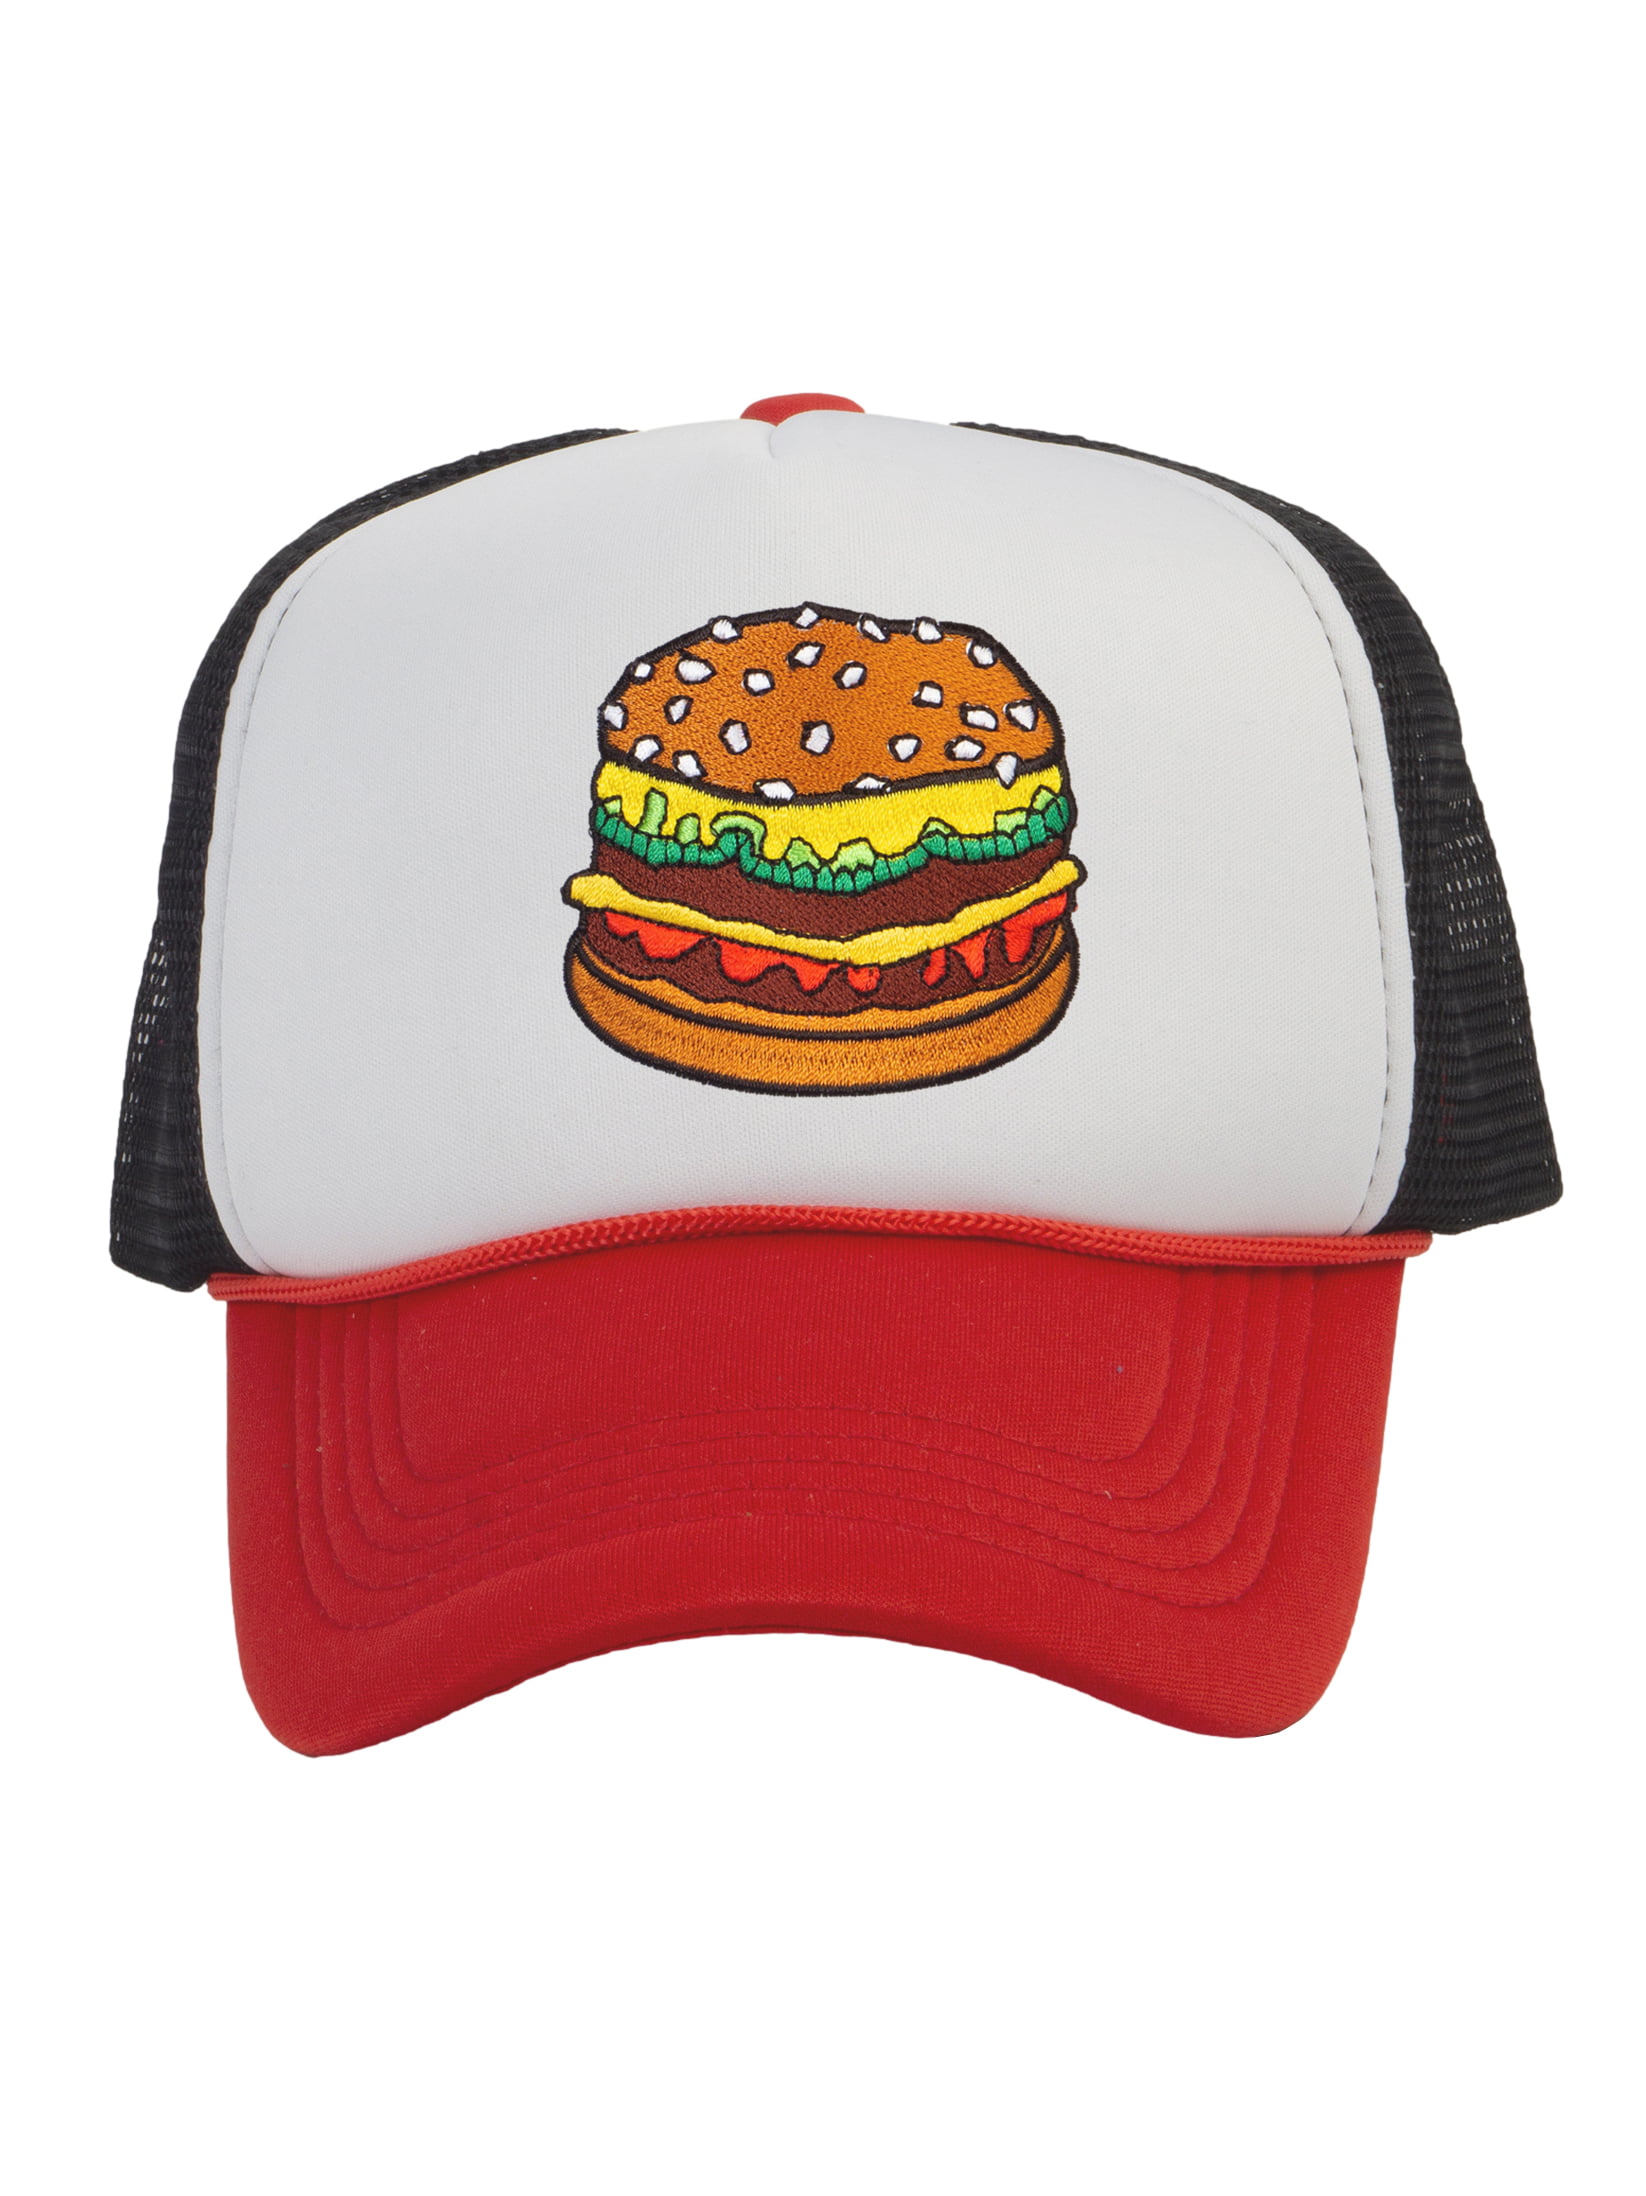 Top Headwear Hamburger Cheeseburger Trucker Hat - Men's Snapback Burger  Food Cap White/Red/Black